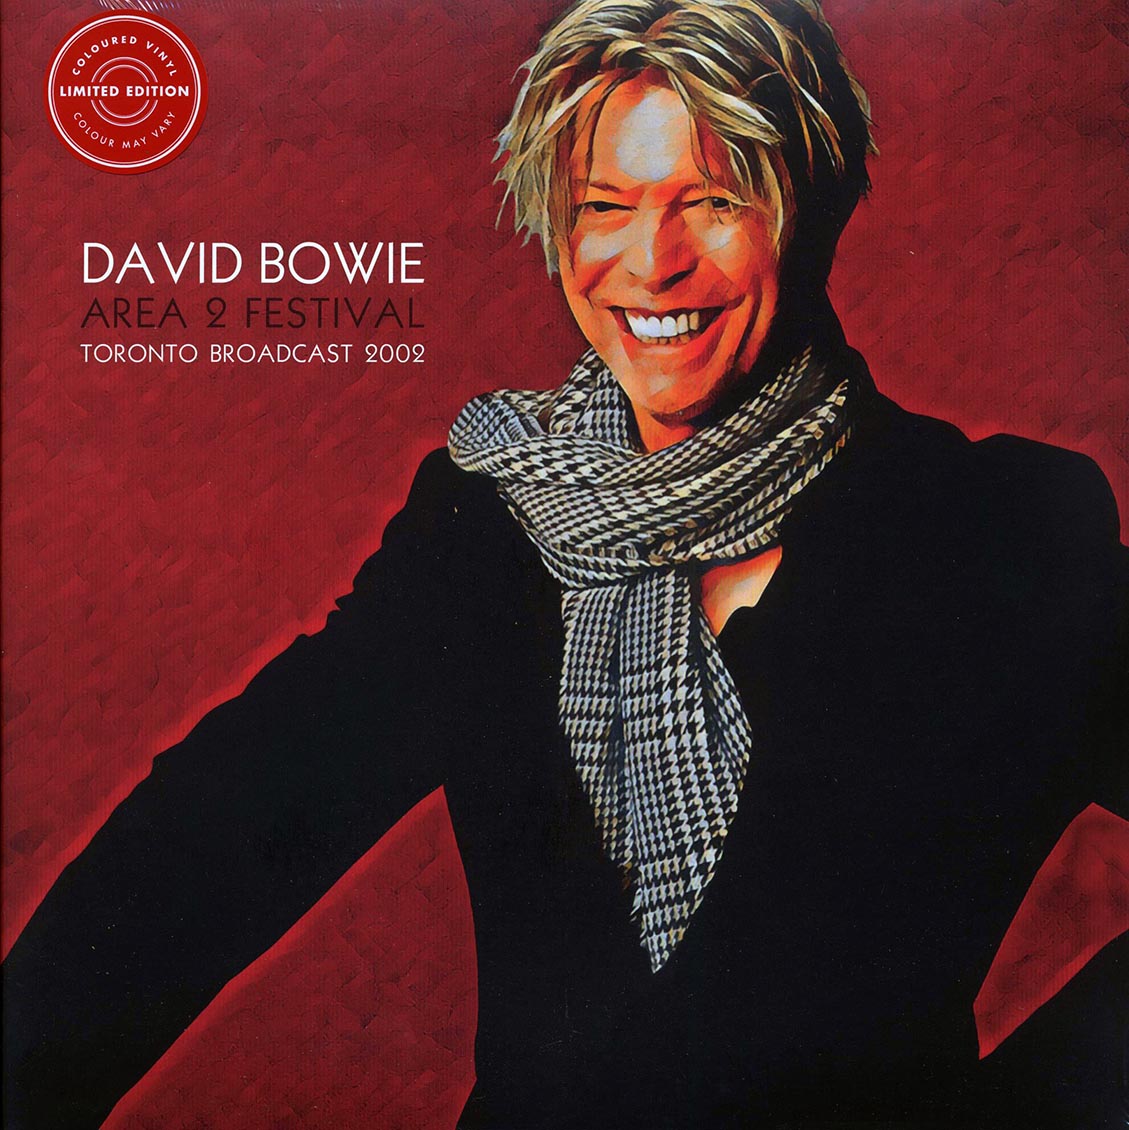 David Bowie - Area 2 Festival: Toronto Broadcast 2002 (ltd. ed.) (2xLP) (white vinyl) - Vinyl LP